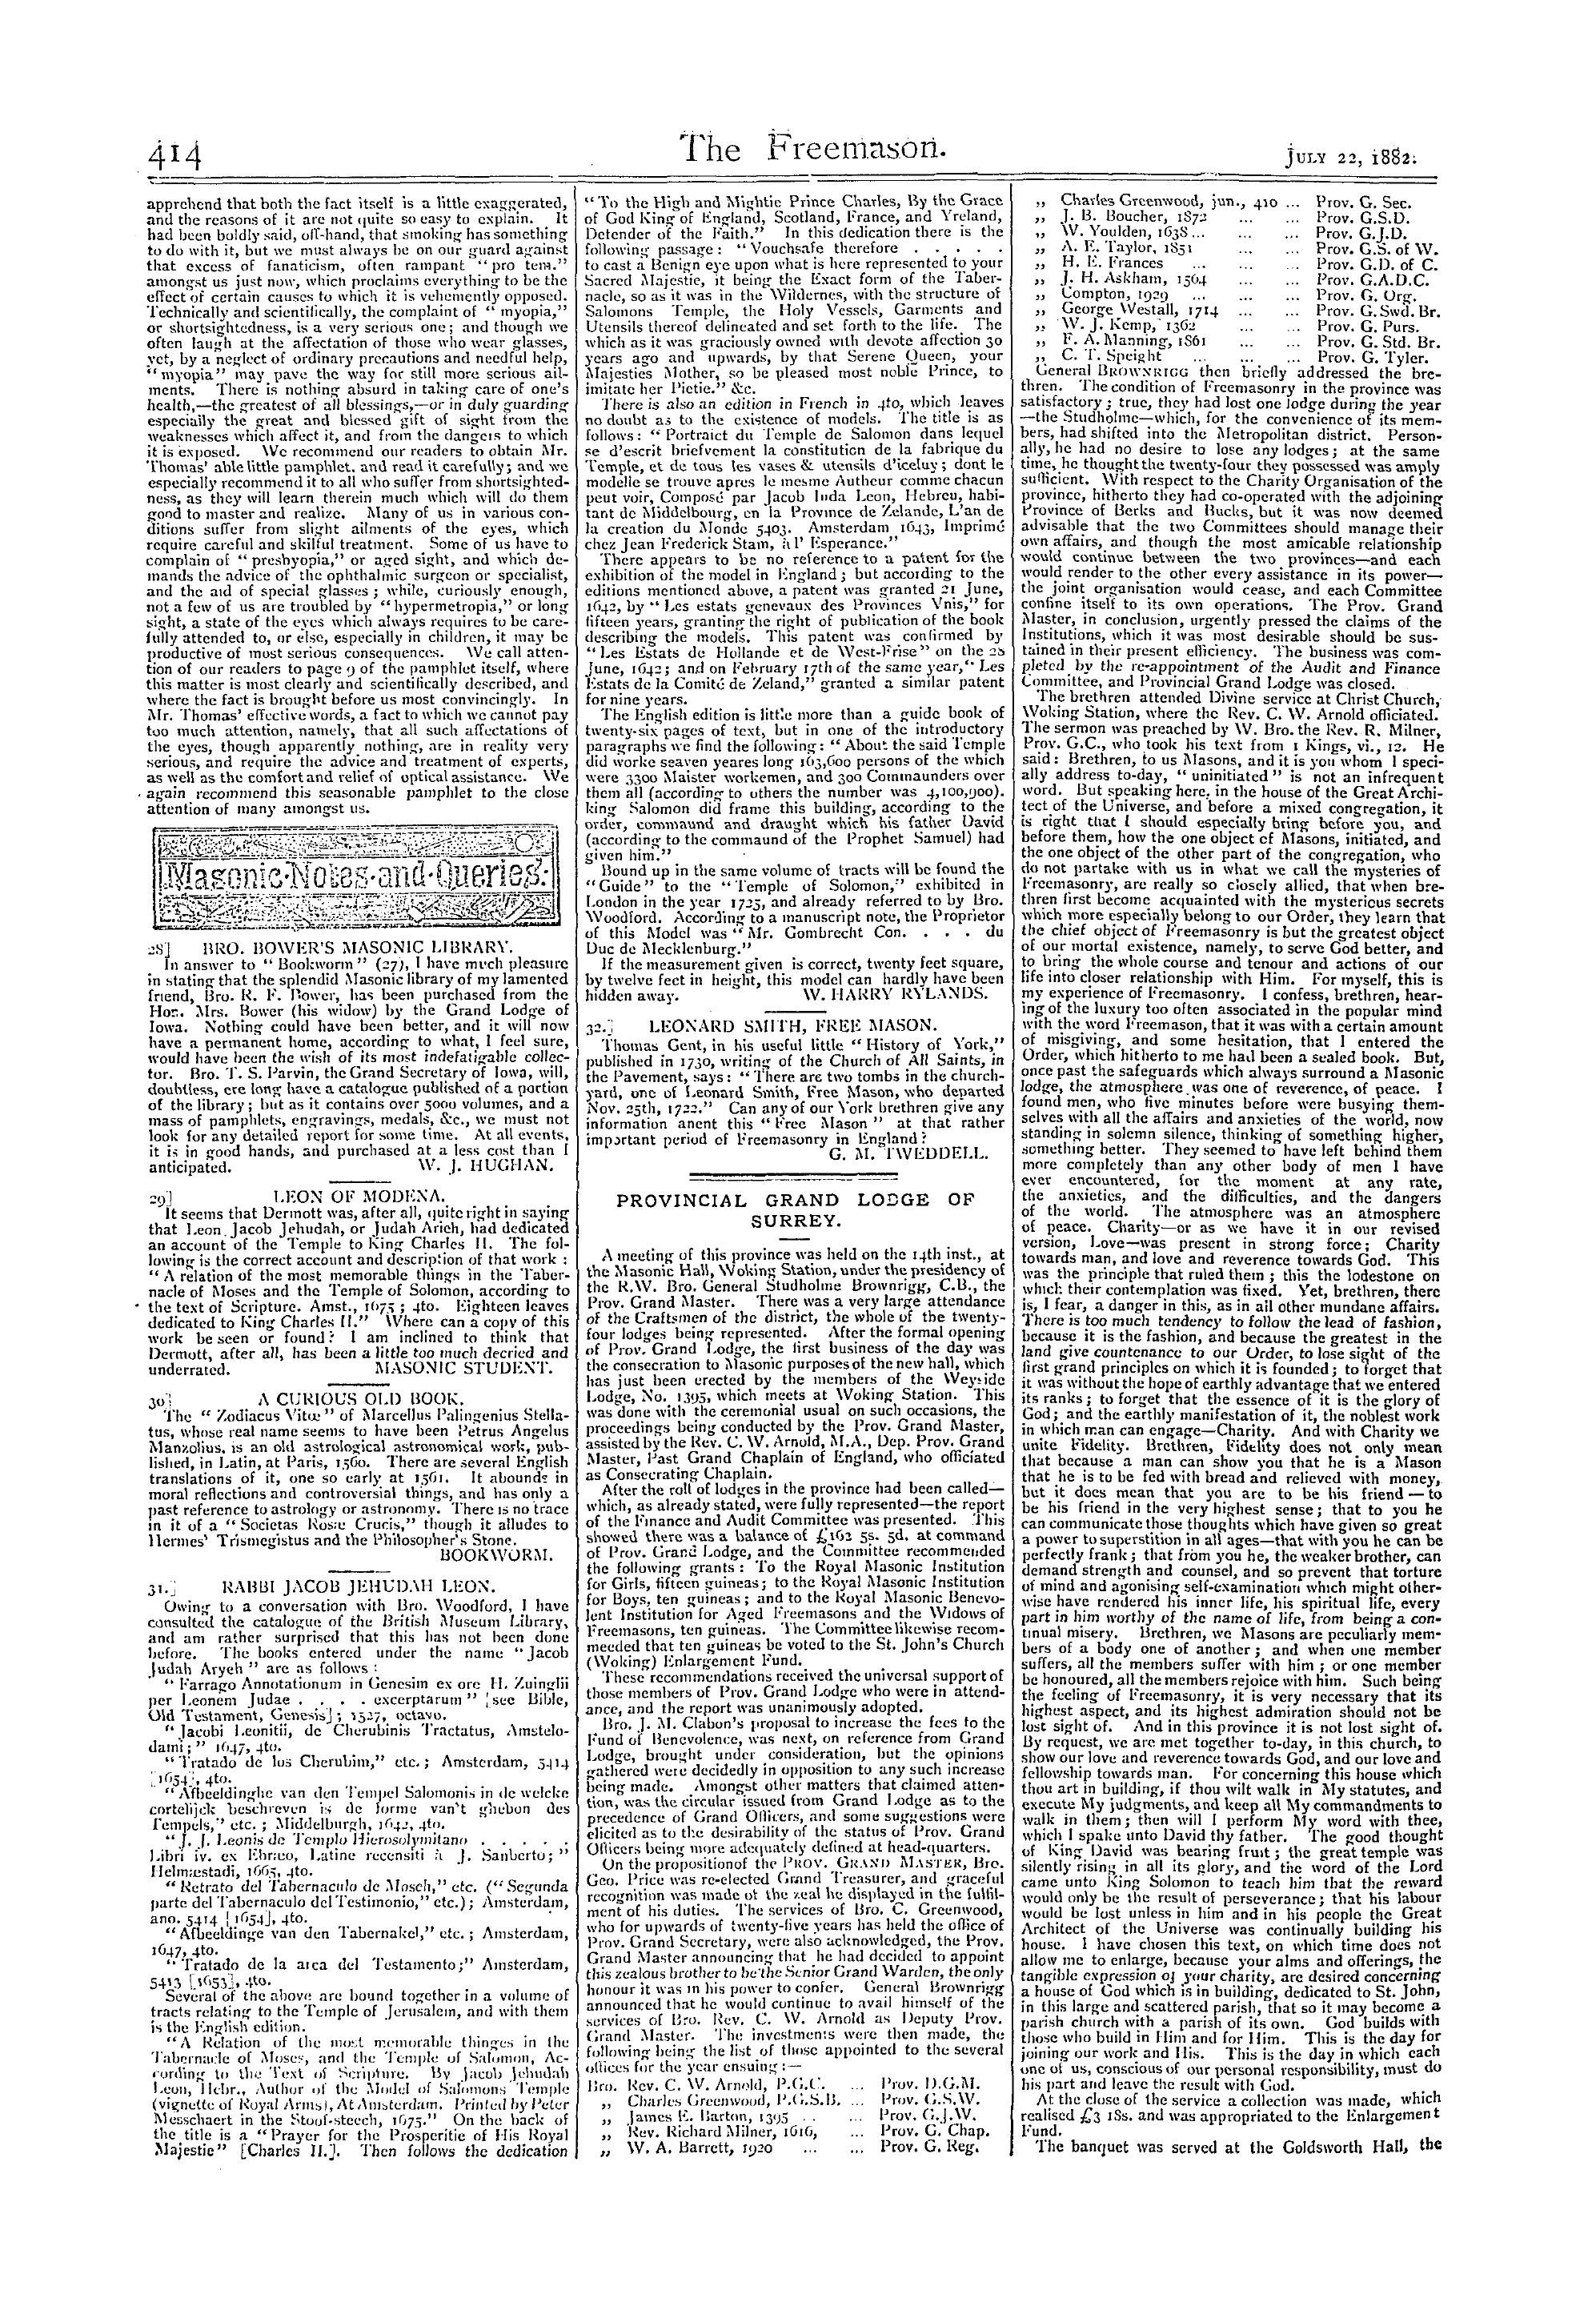 The Freemason: 1882-07-22 - Reviews.